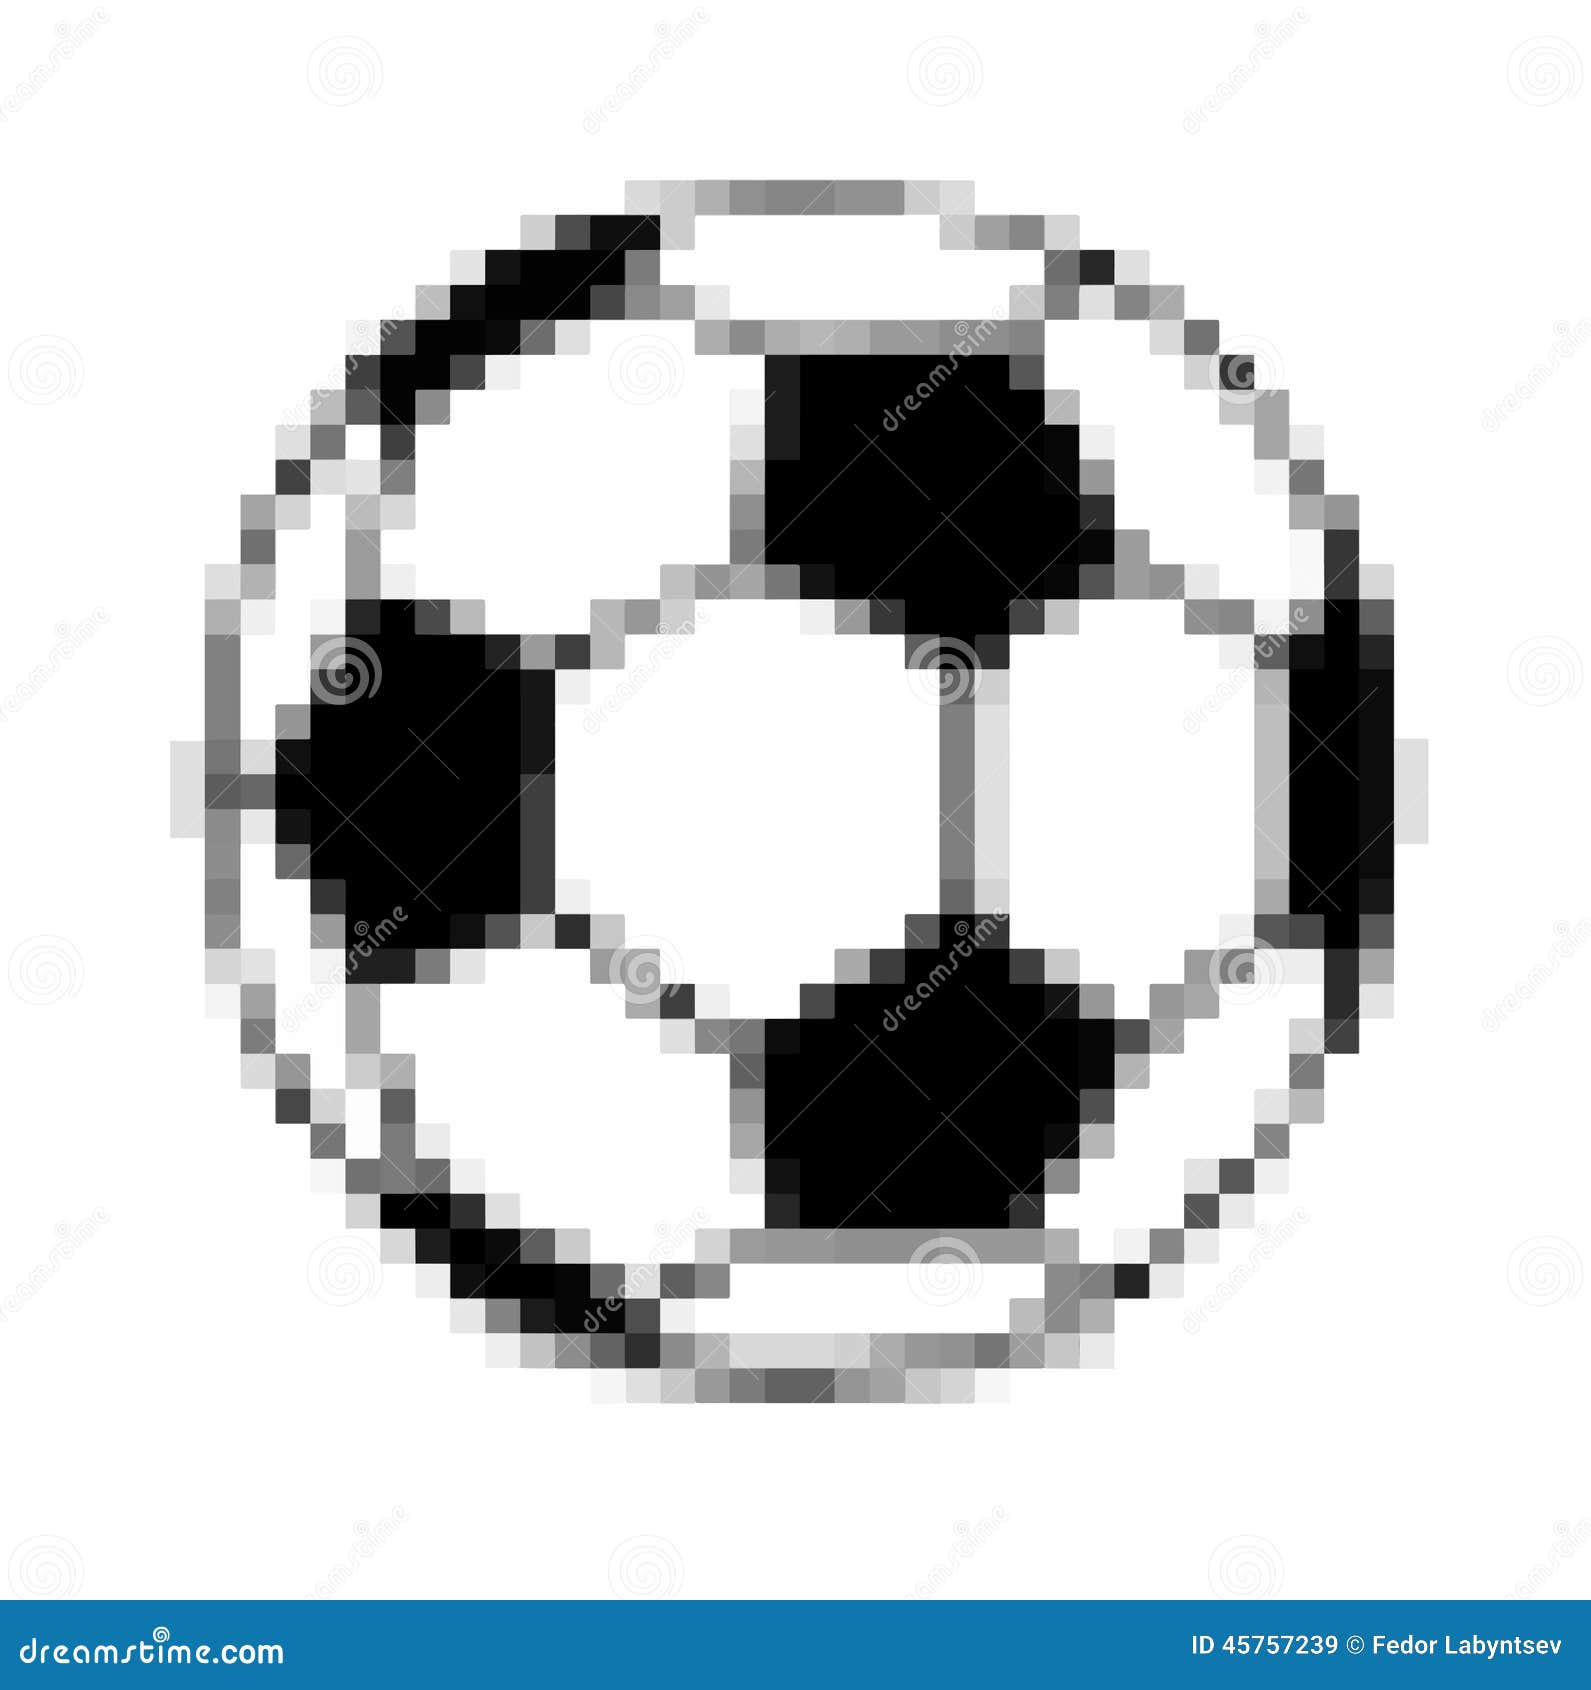 Soccer Ball Of The Pixel Grid Stock Illustration